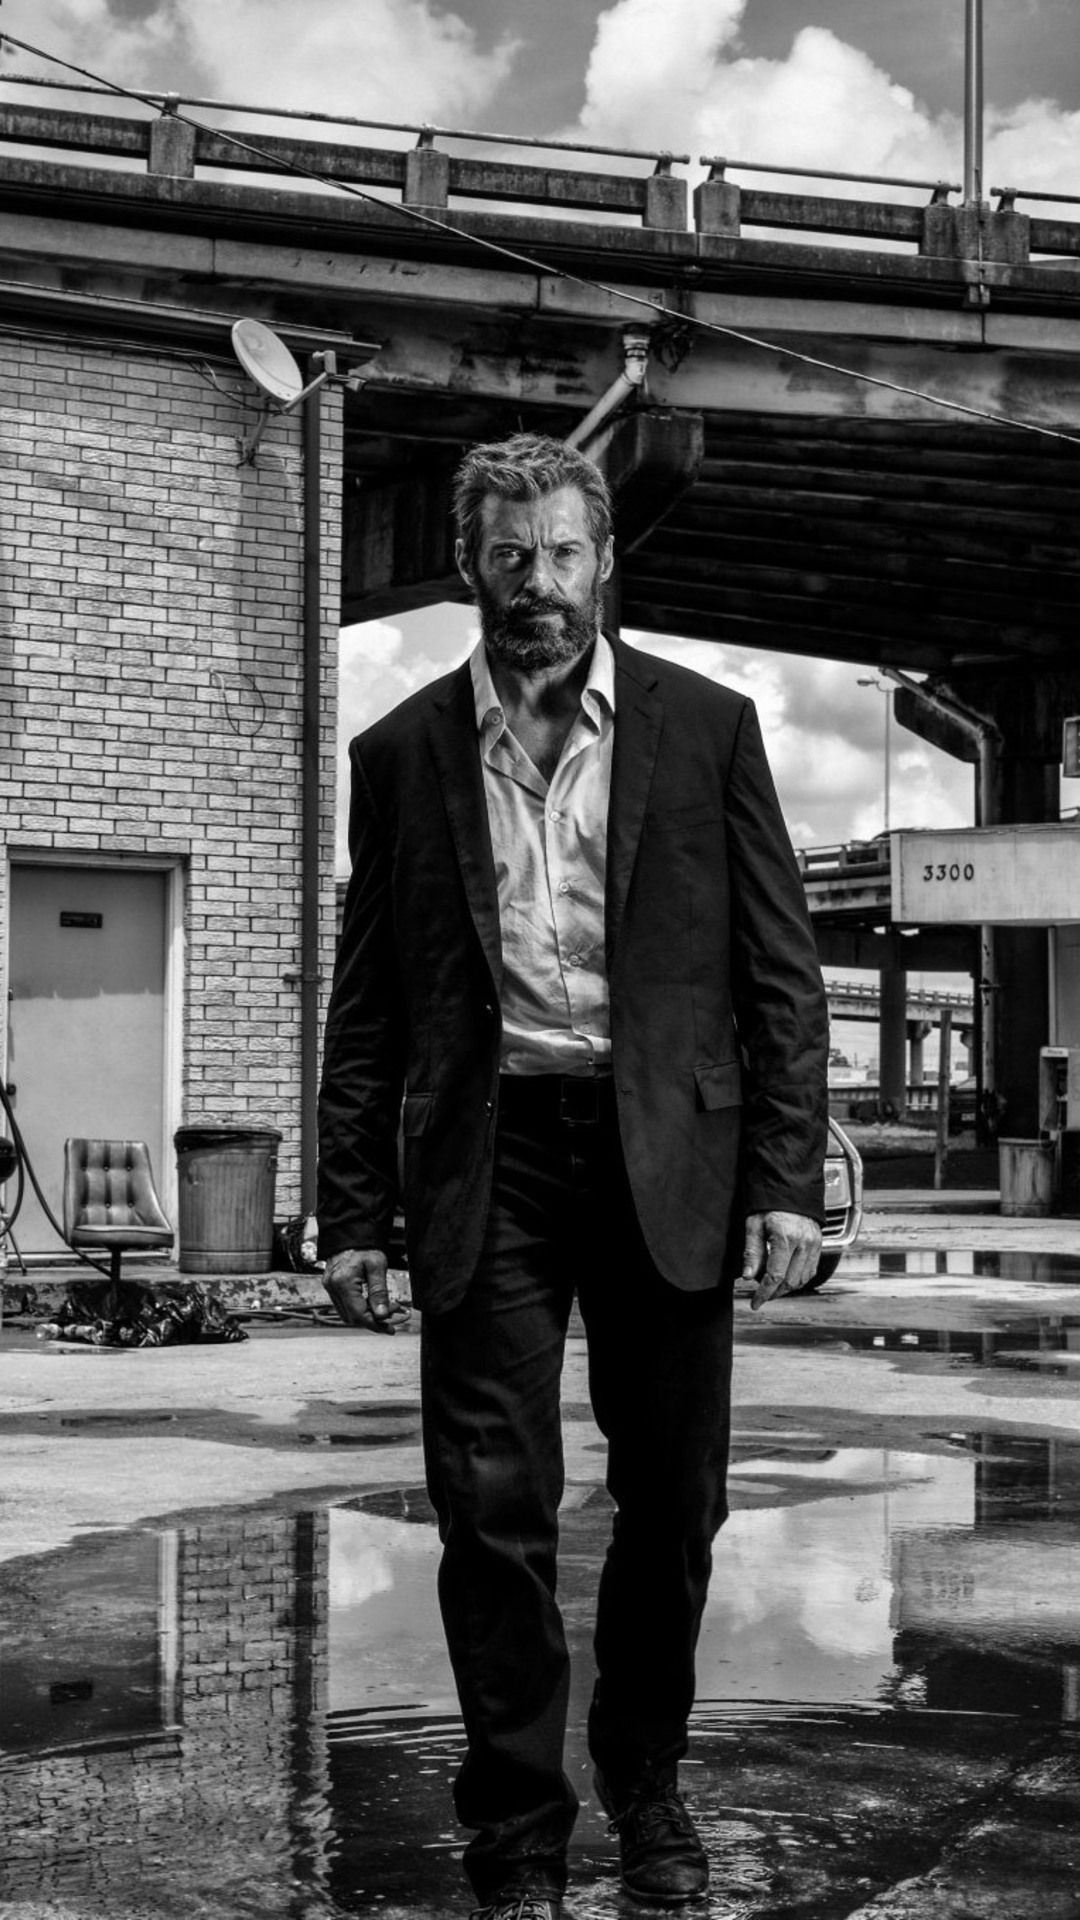 Download Logan 2017 Hugh Jackman Suit HD Wallpaper In 1080x1920